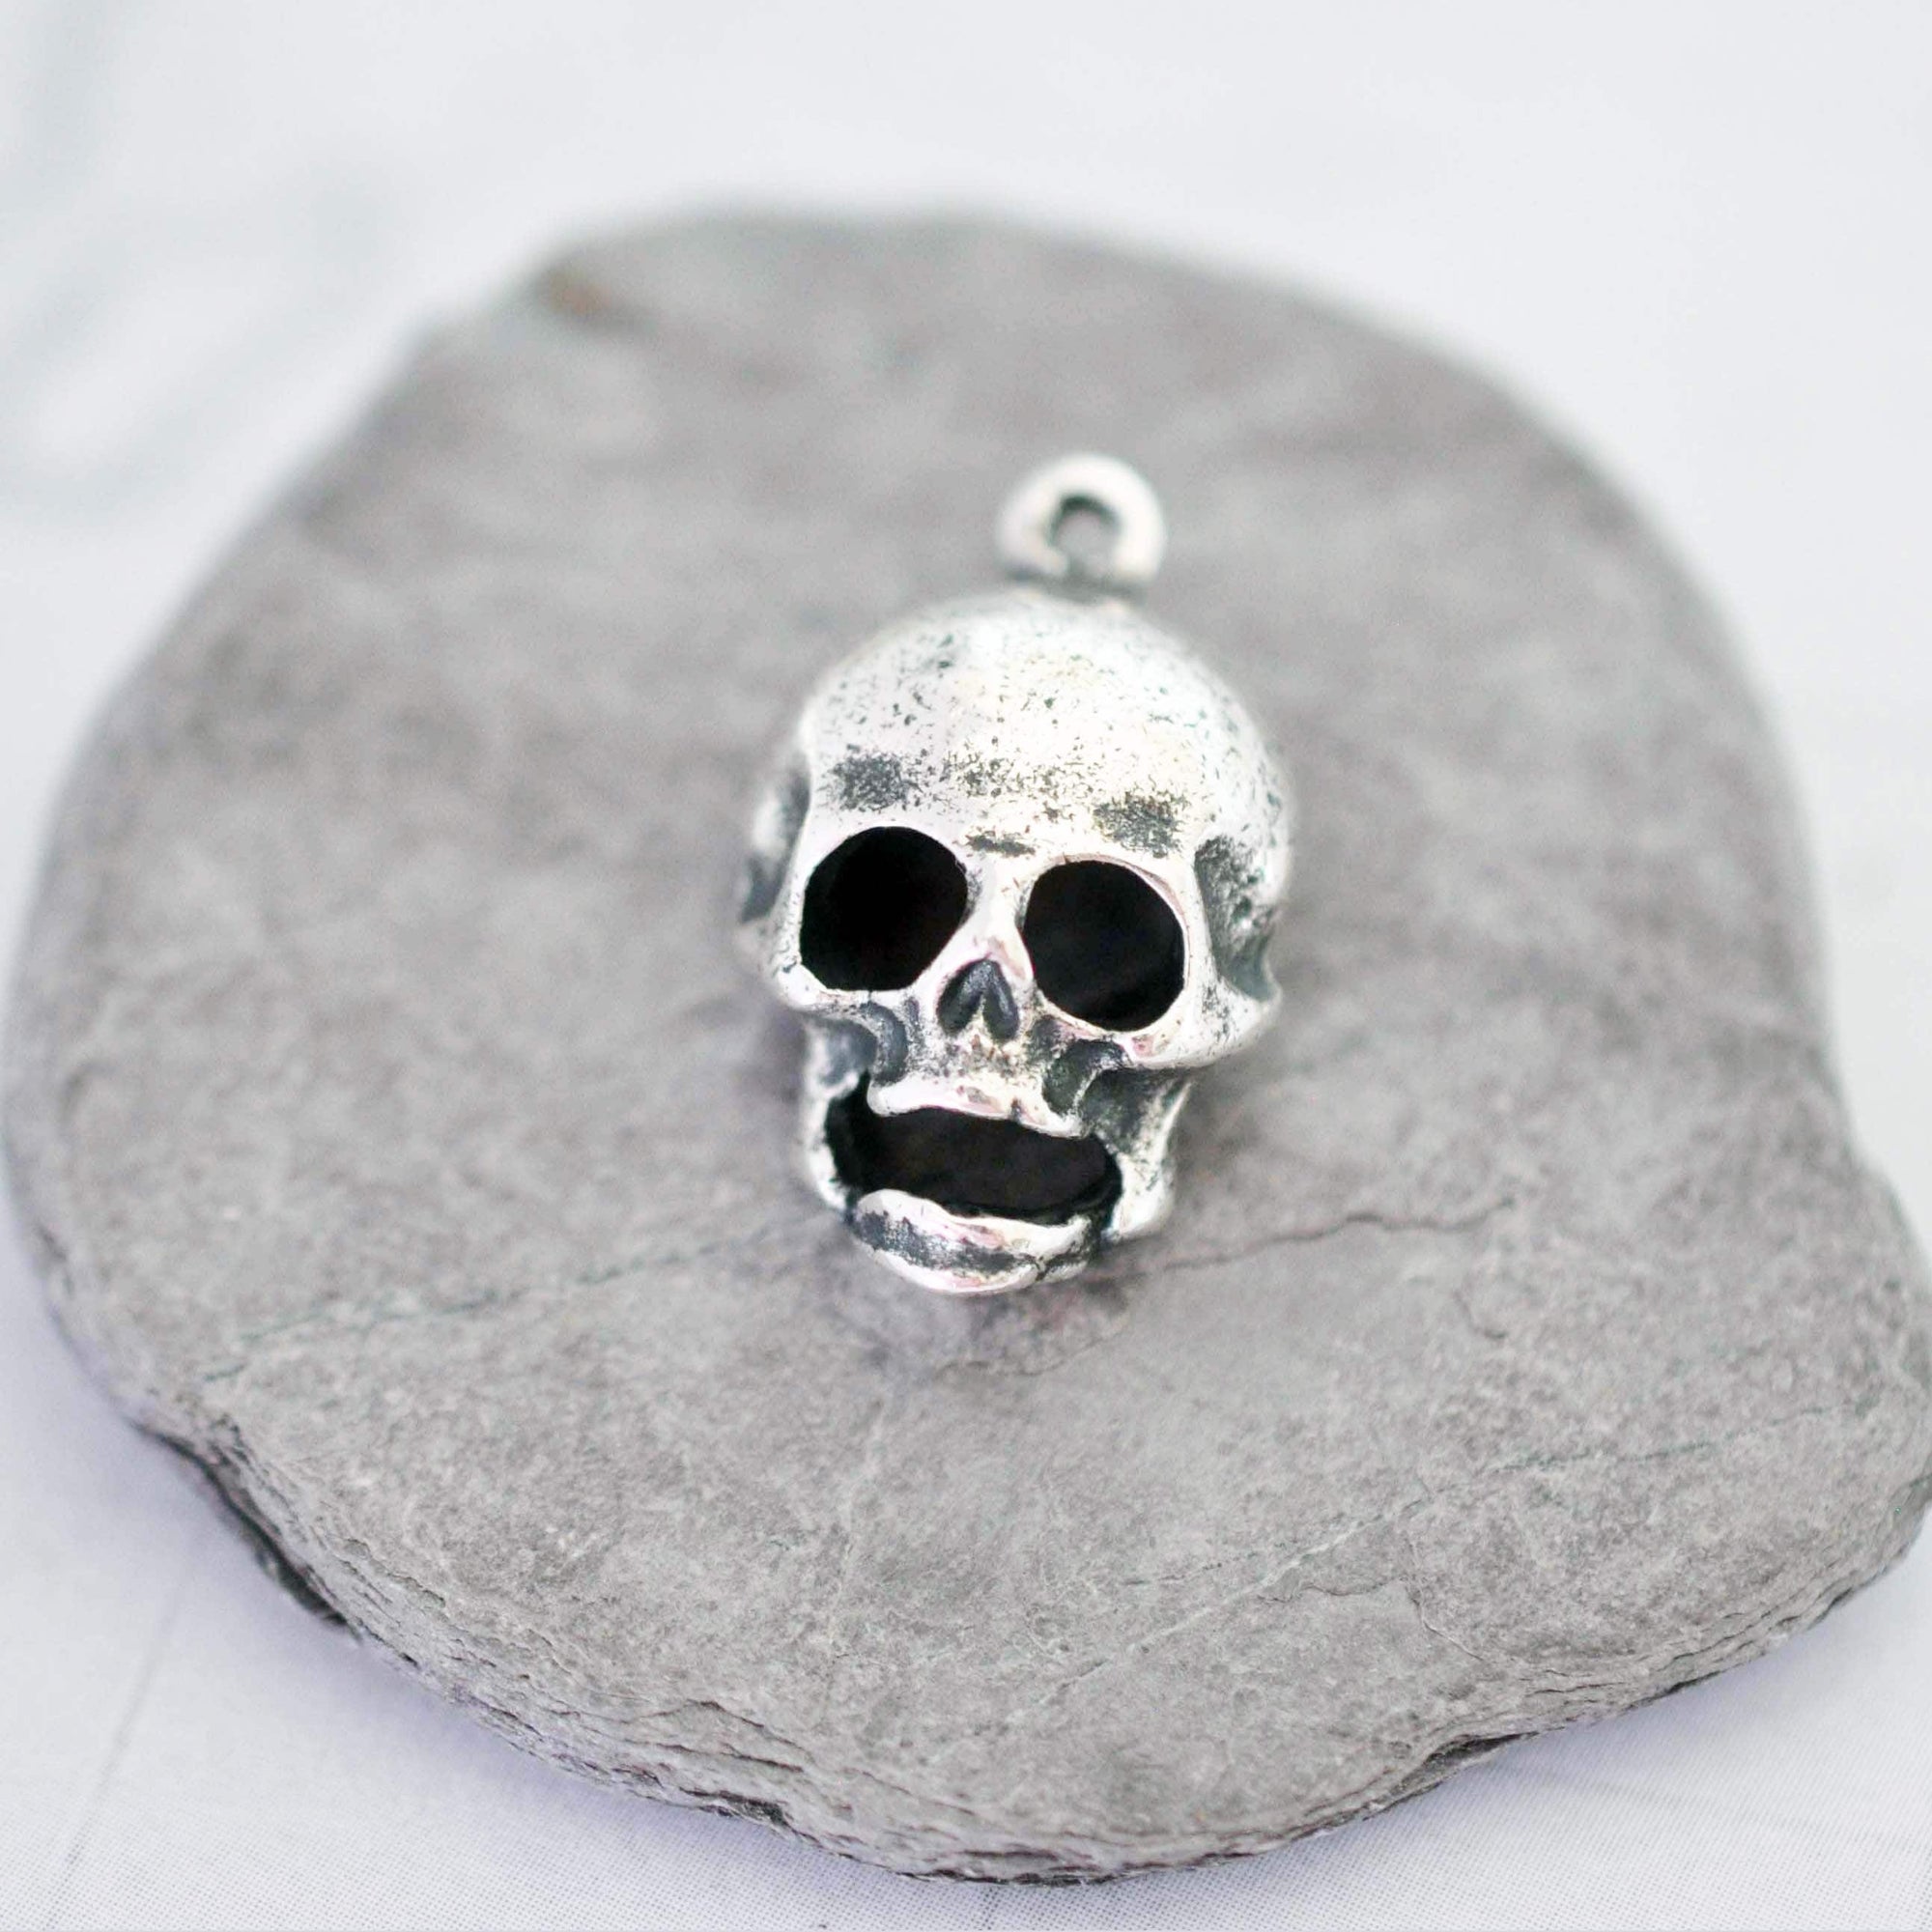 Antique Silver Ox Skull Halloween Charm - 1 Charm